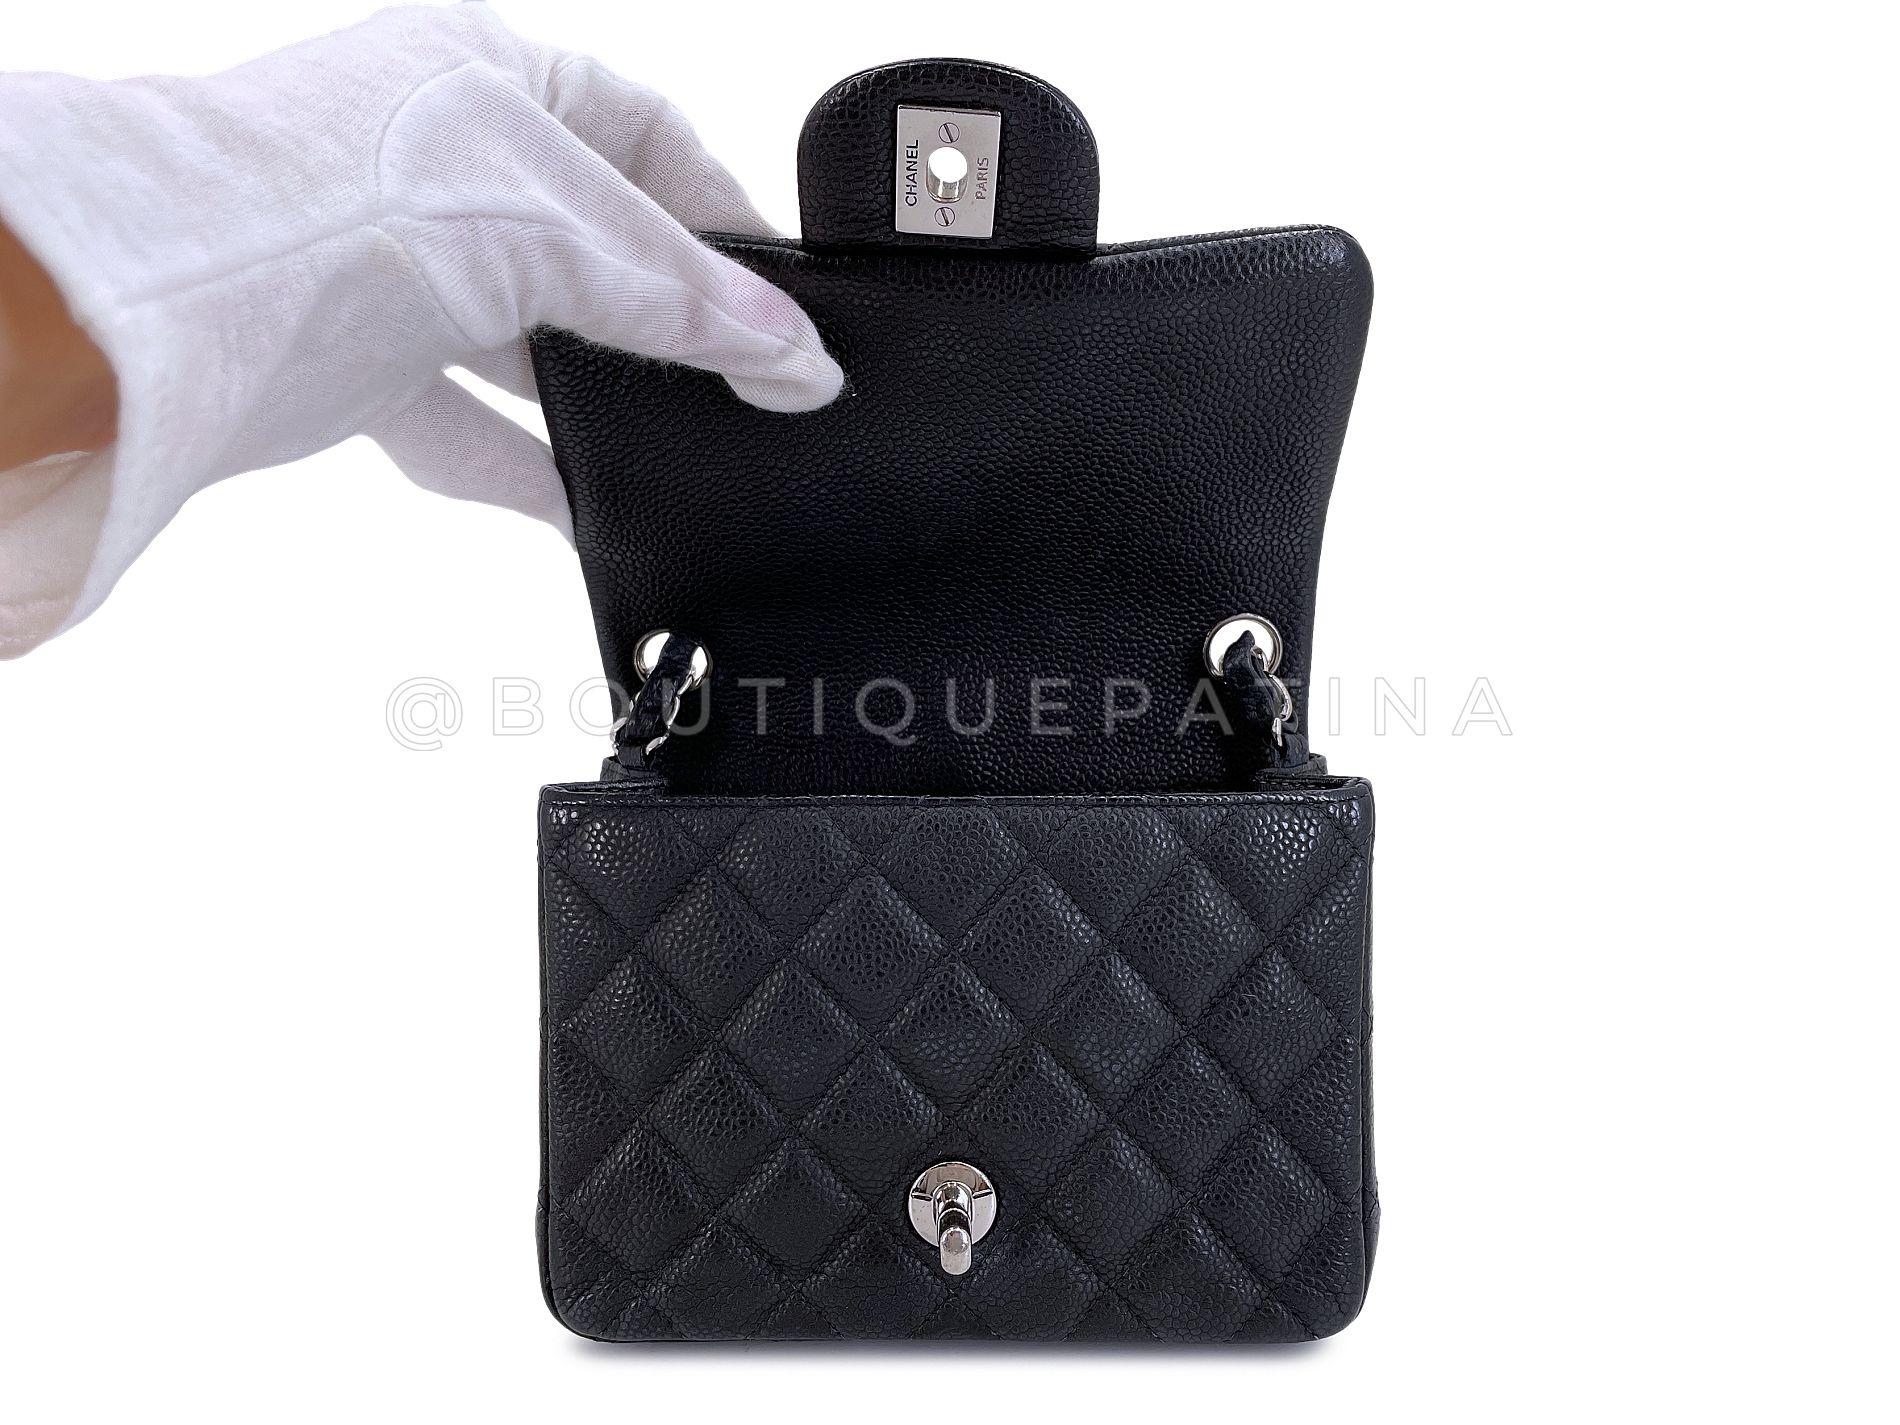 Chanel Black Caviar Square Mini Classic Flap Bag SHW 68093 For Sale 5